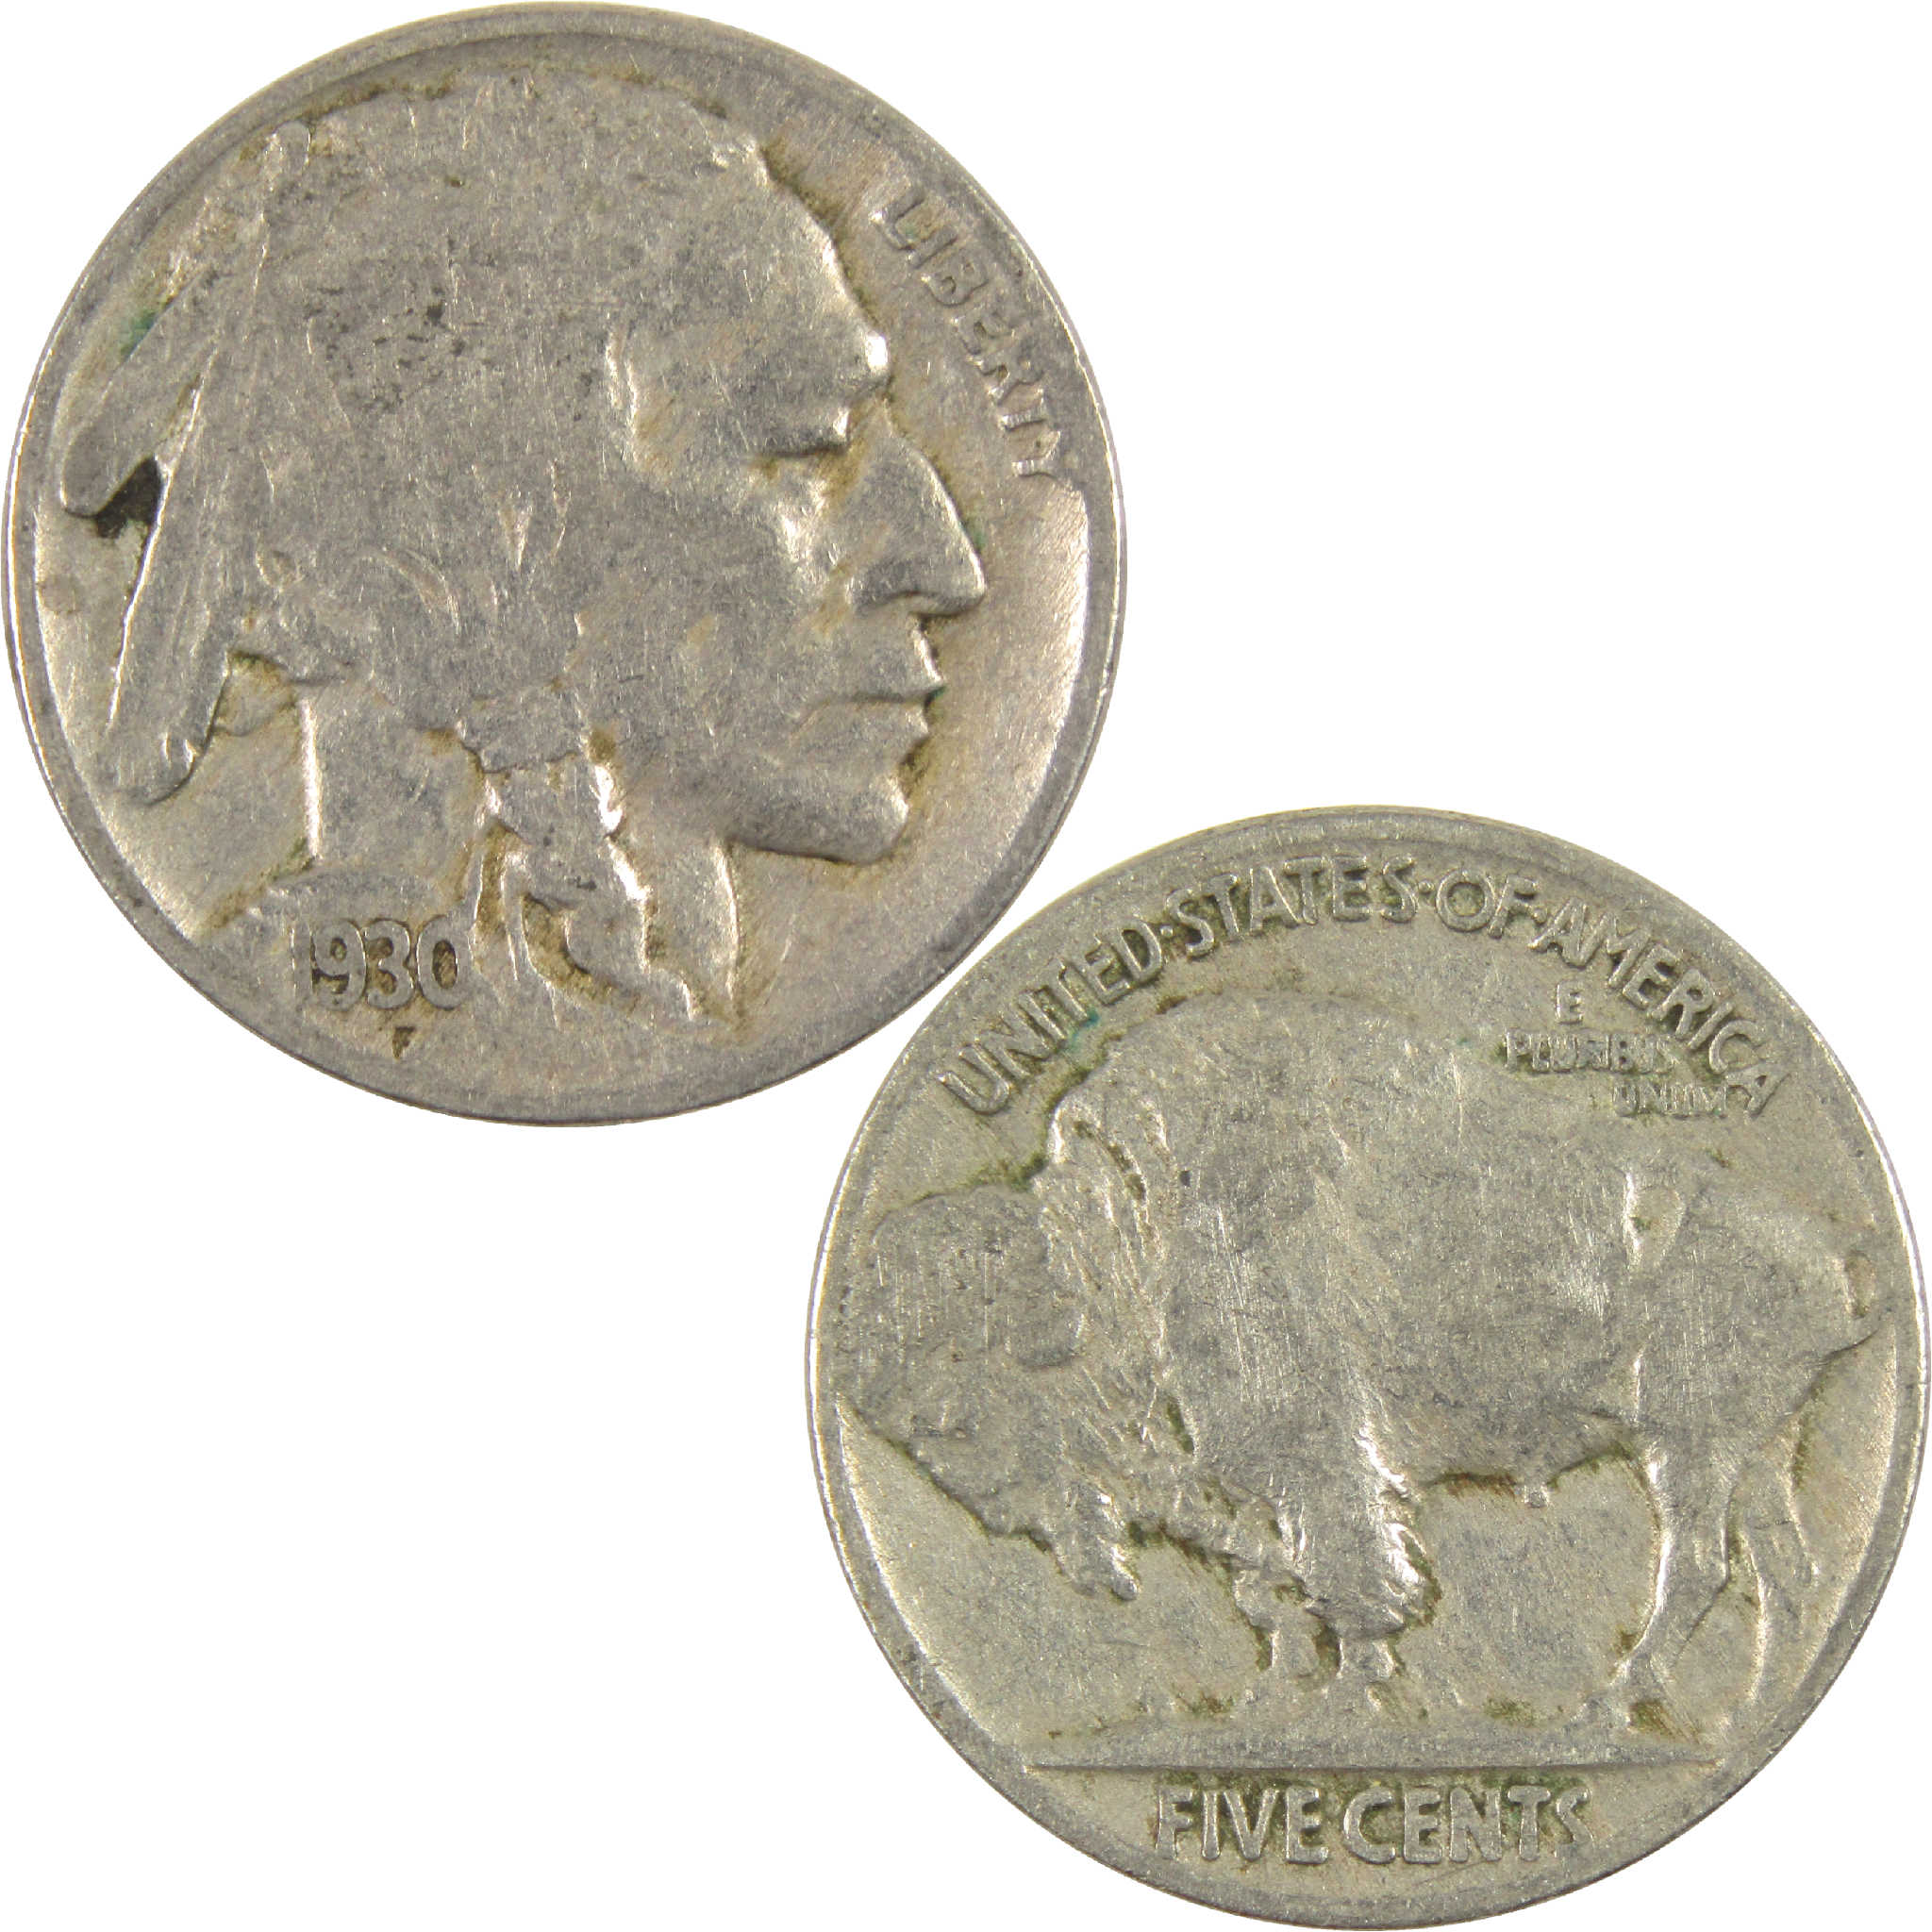 1930 Indian Head Buffalo Nickel VG Very Good 5c Coin